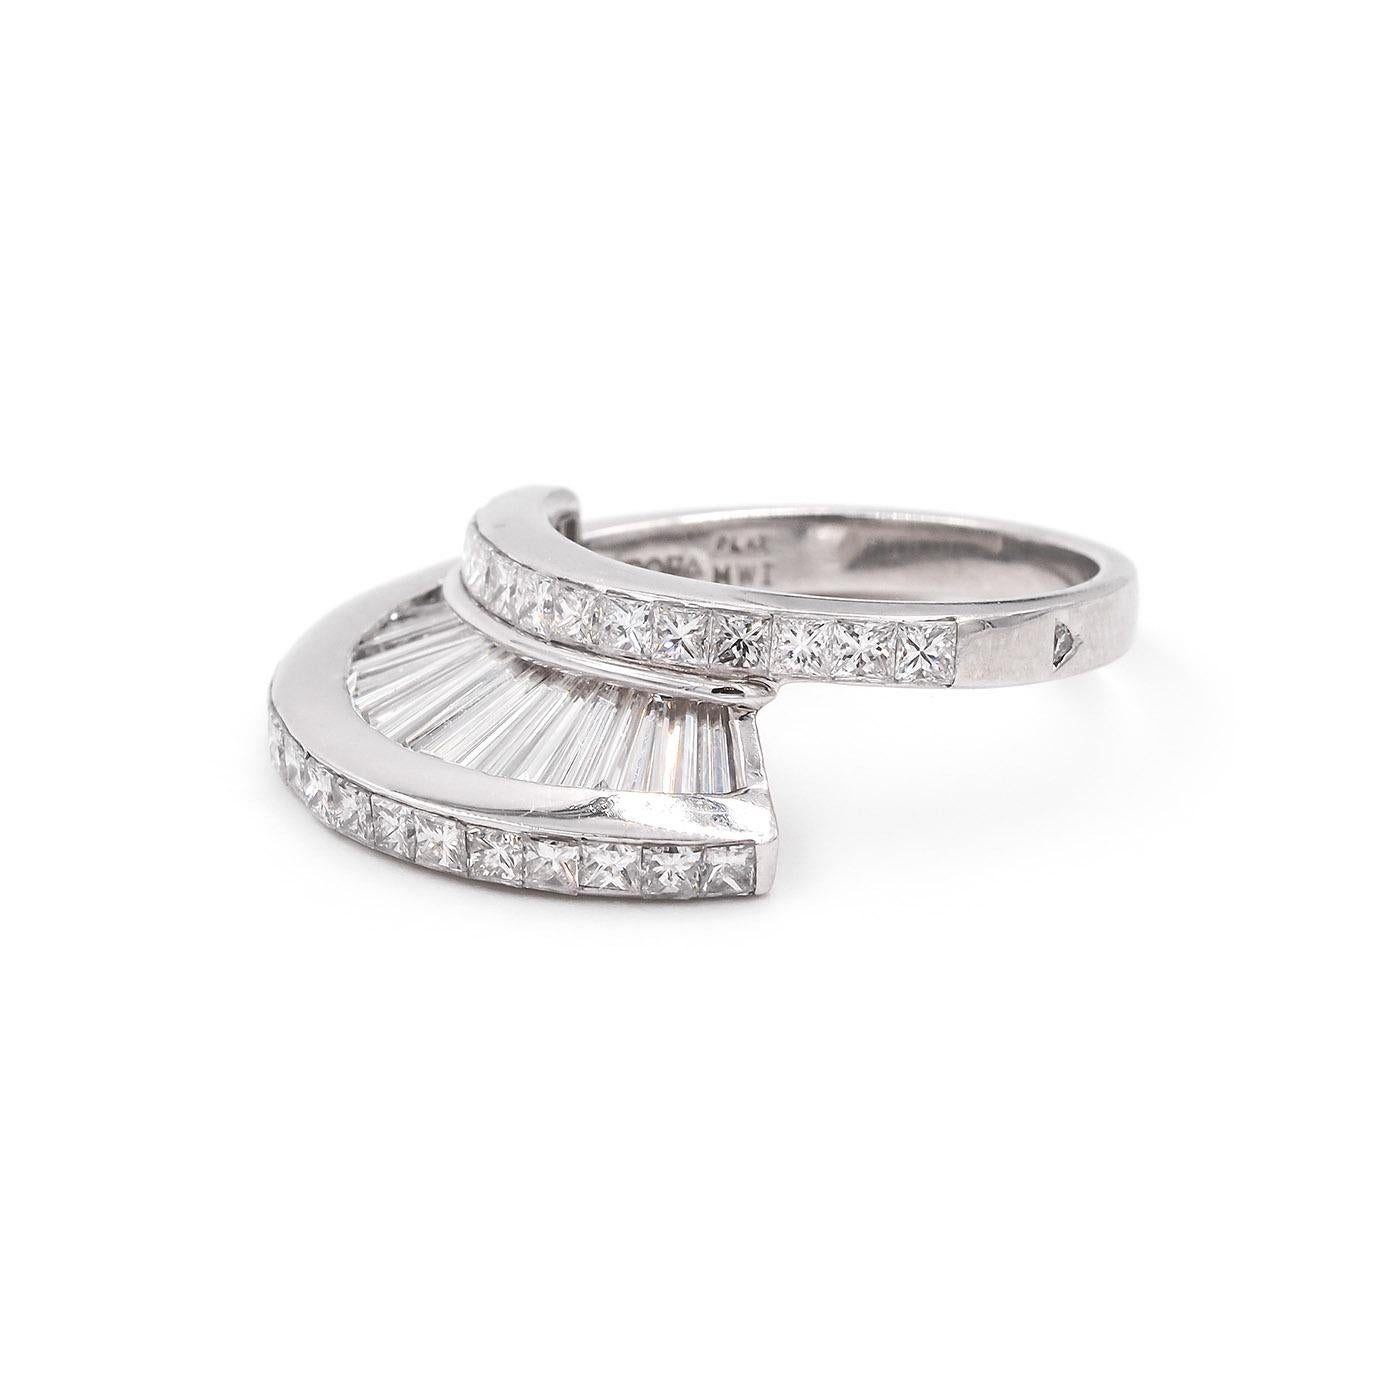 Women's Vintage Baguette Cut & Princess Cut Diamond 'Fan' Ring Set by MWI Eloquence For Sale